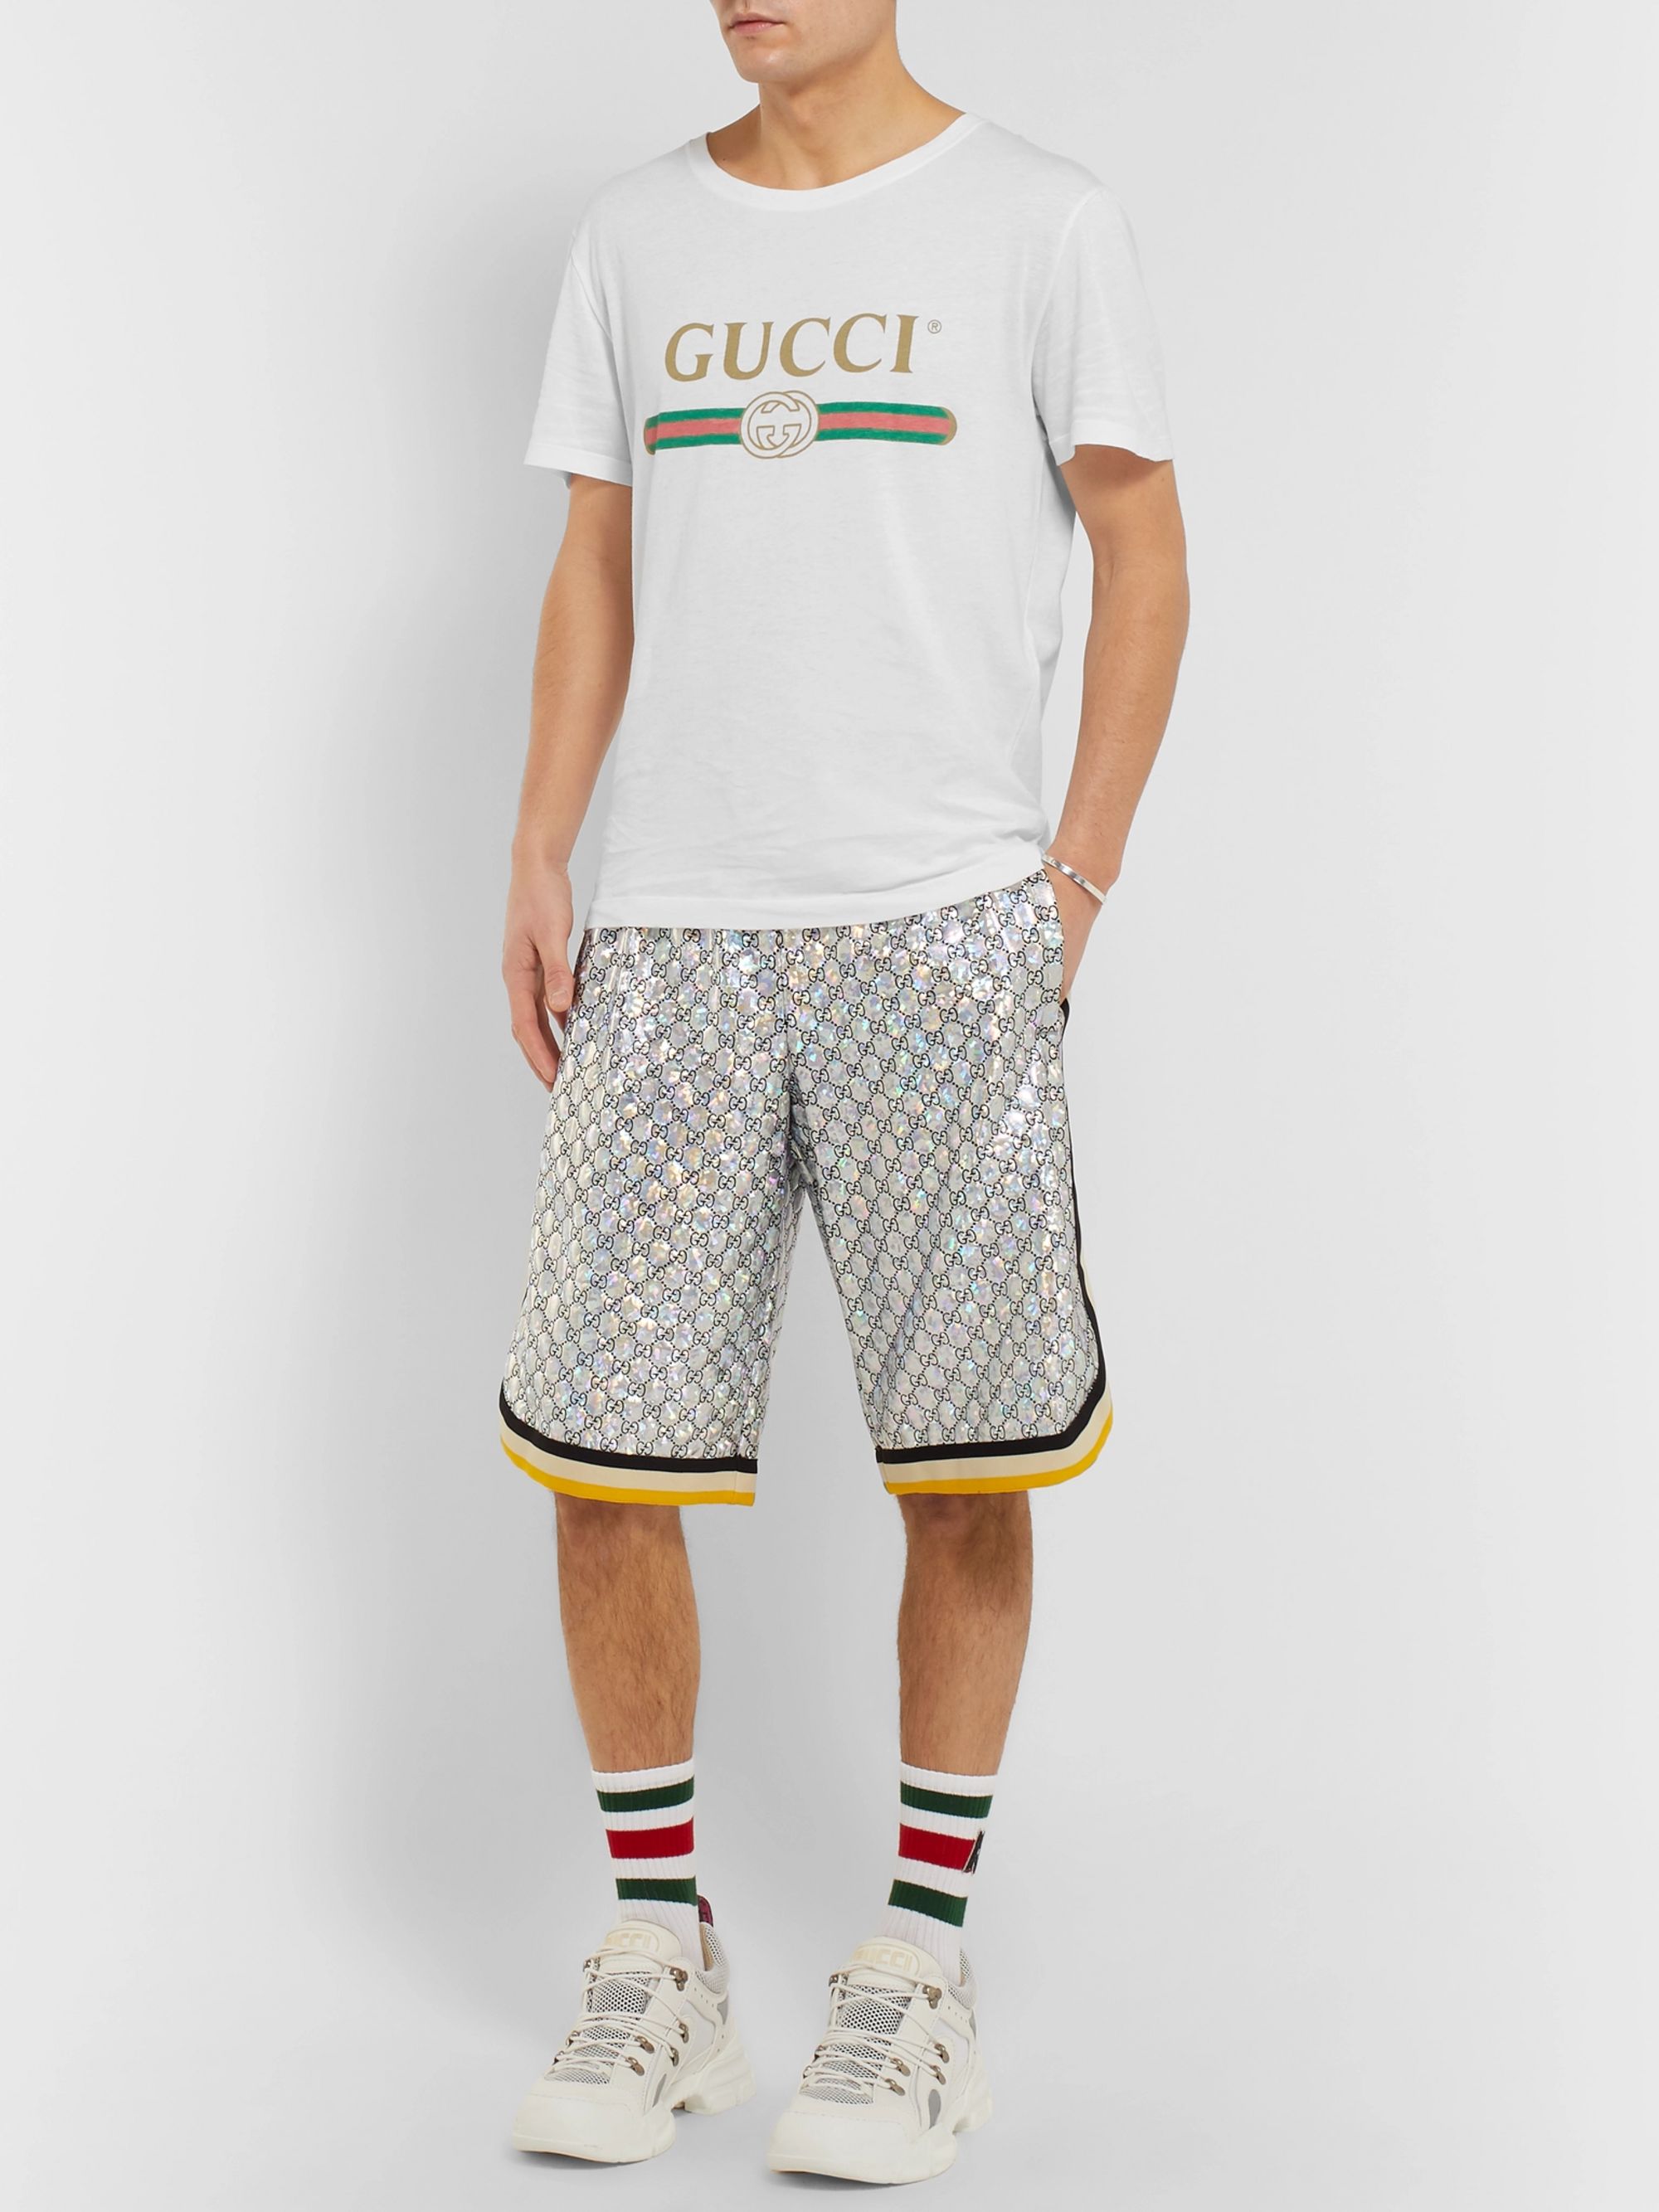 gucci top and shorts